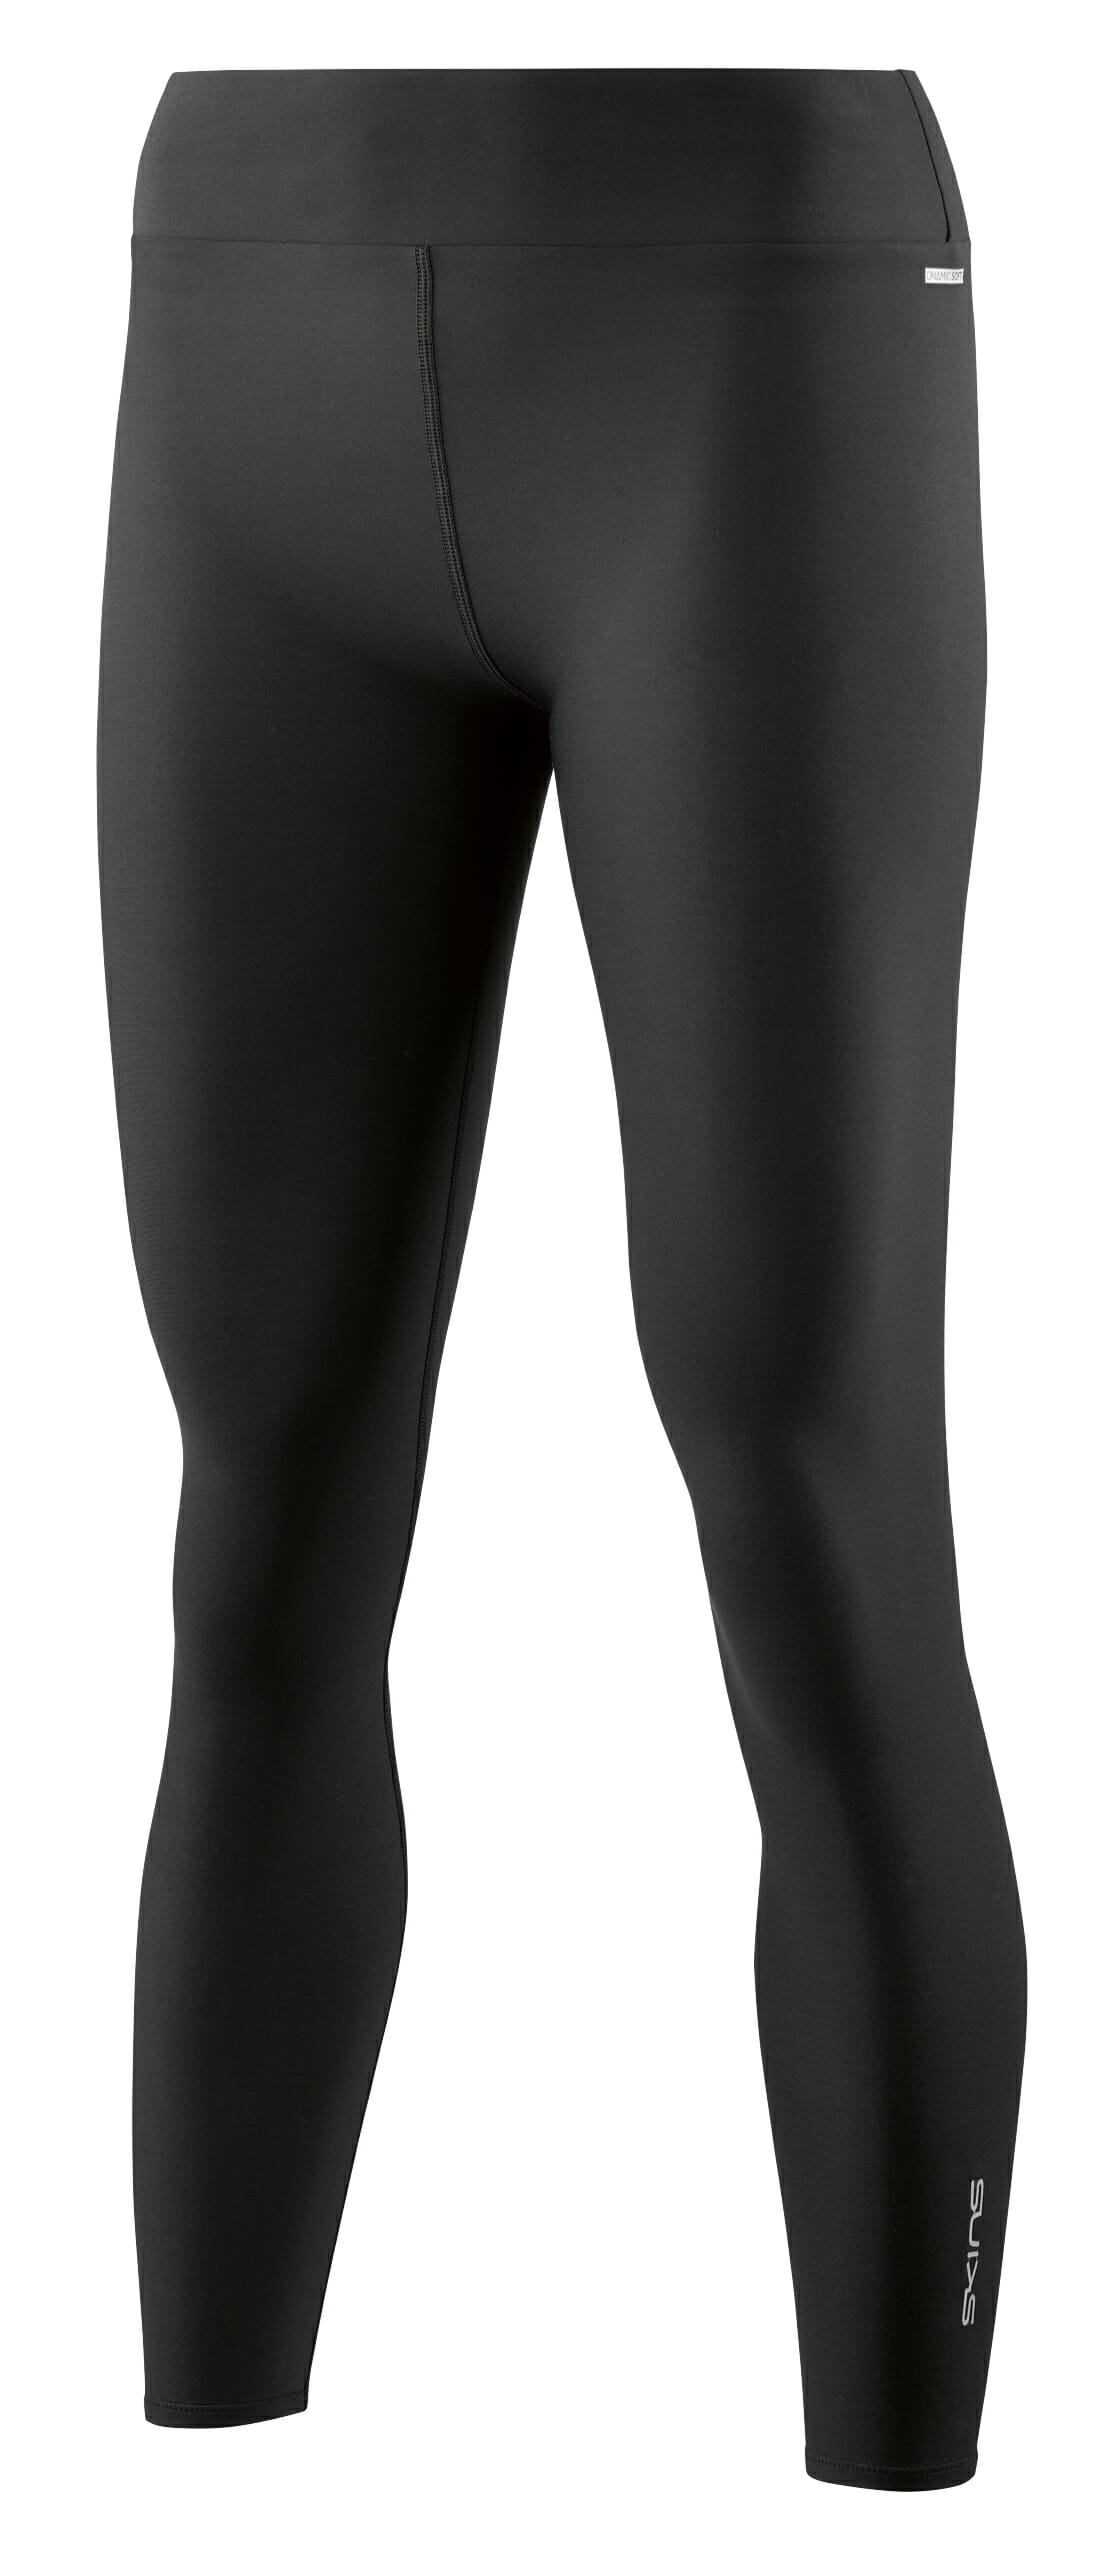 Soft Compression Leggings, Black F15229 - Trinys Activewear UK